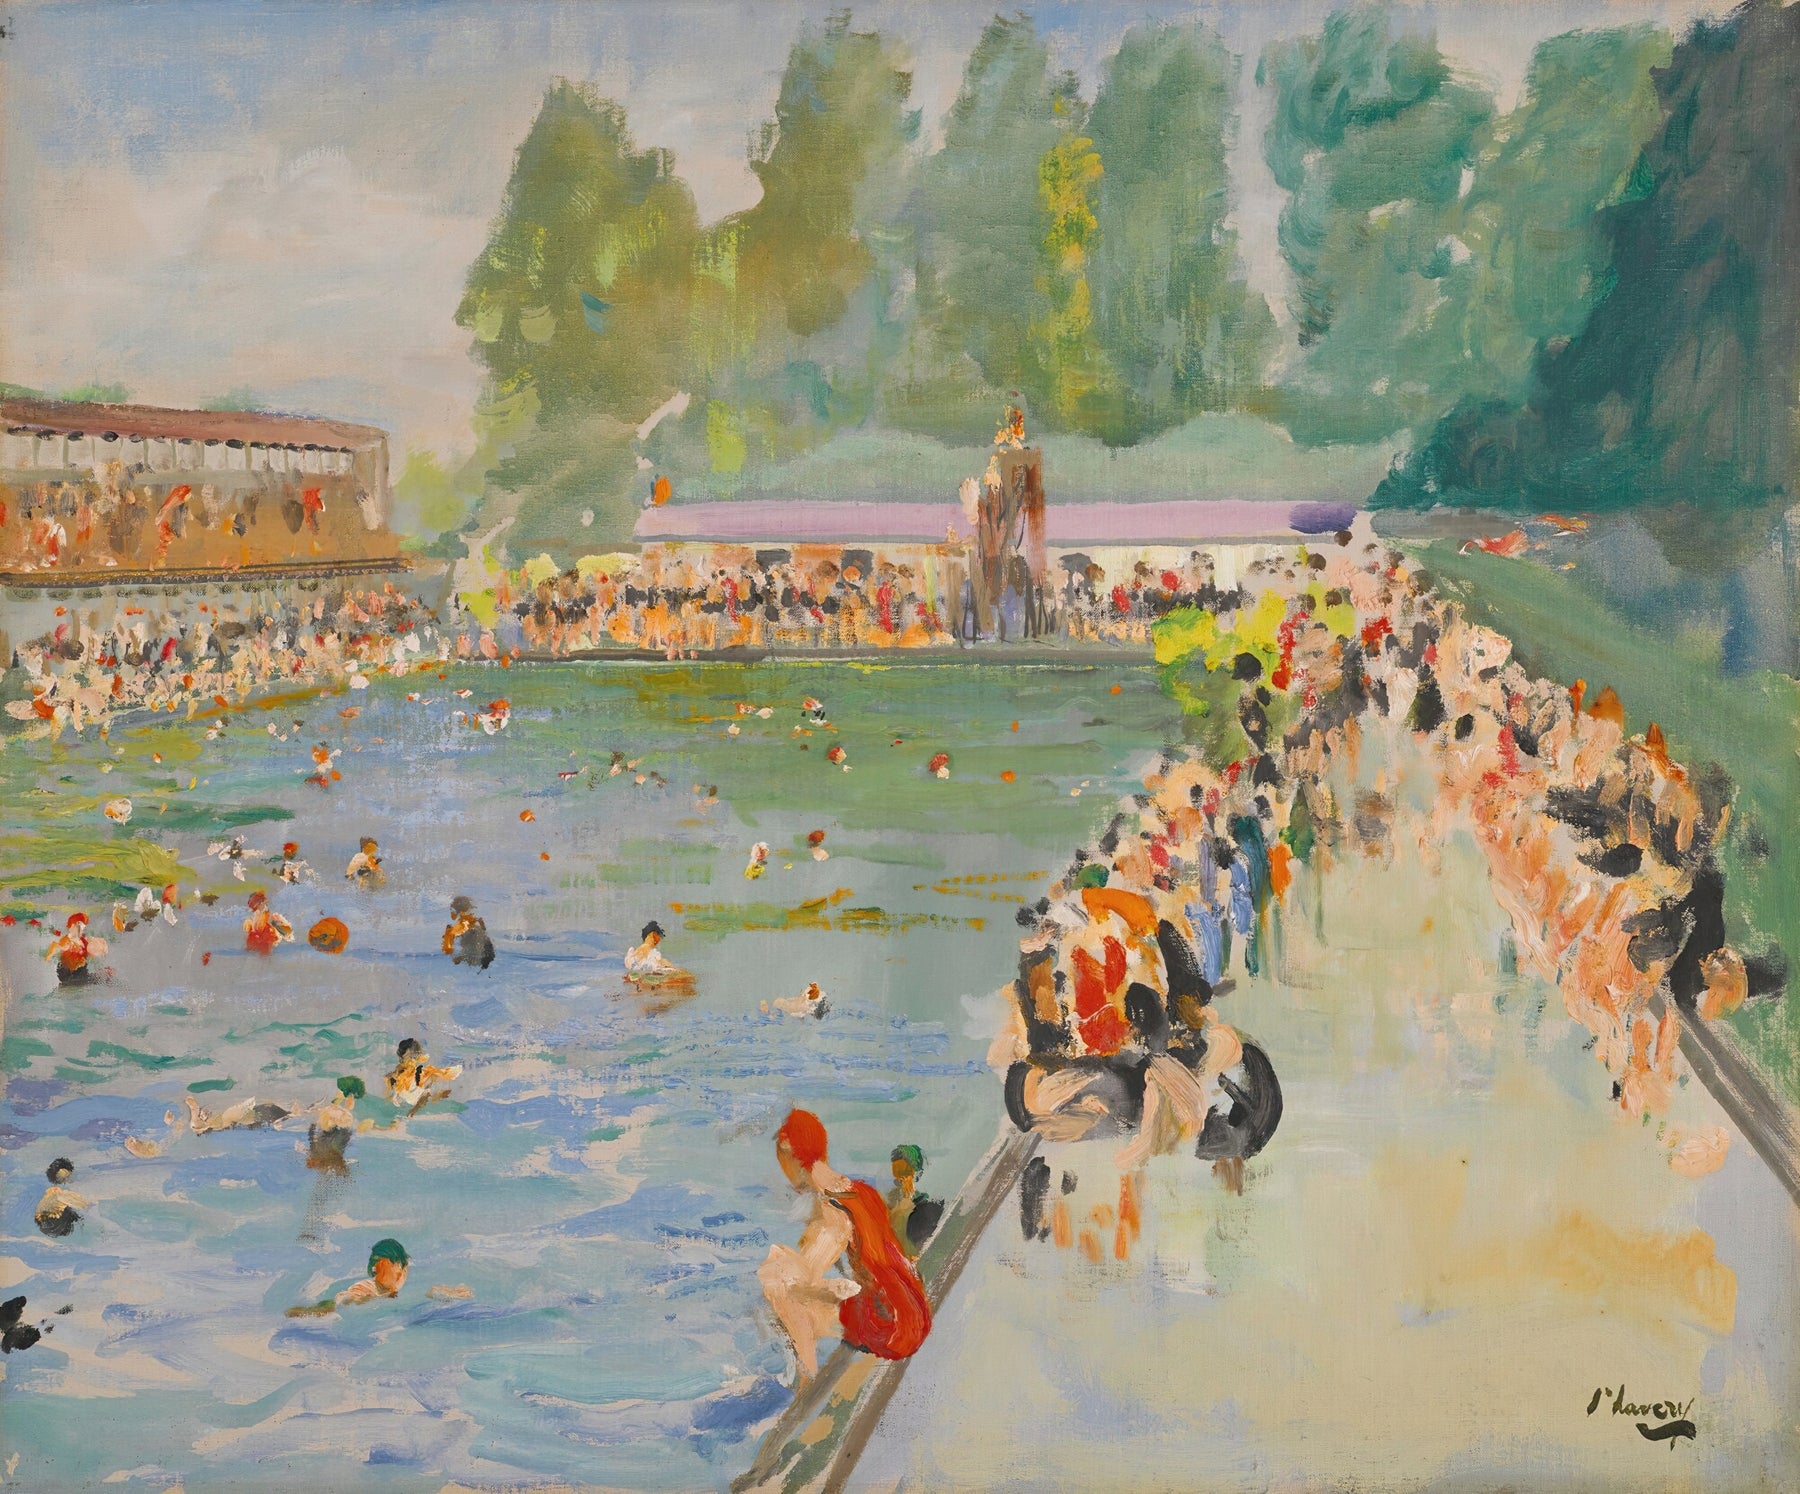 Chiswick swimming pool, London (1930s) | Sir John Lavery prints Posters, Prints, & Visual Artwork The Trumpet Shop   